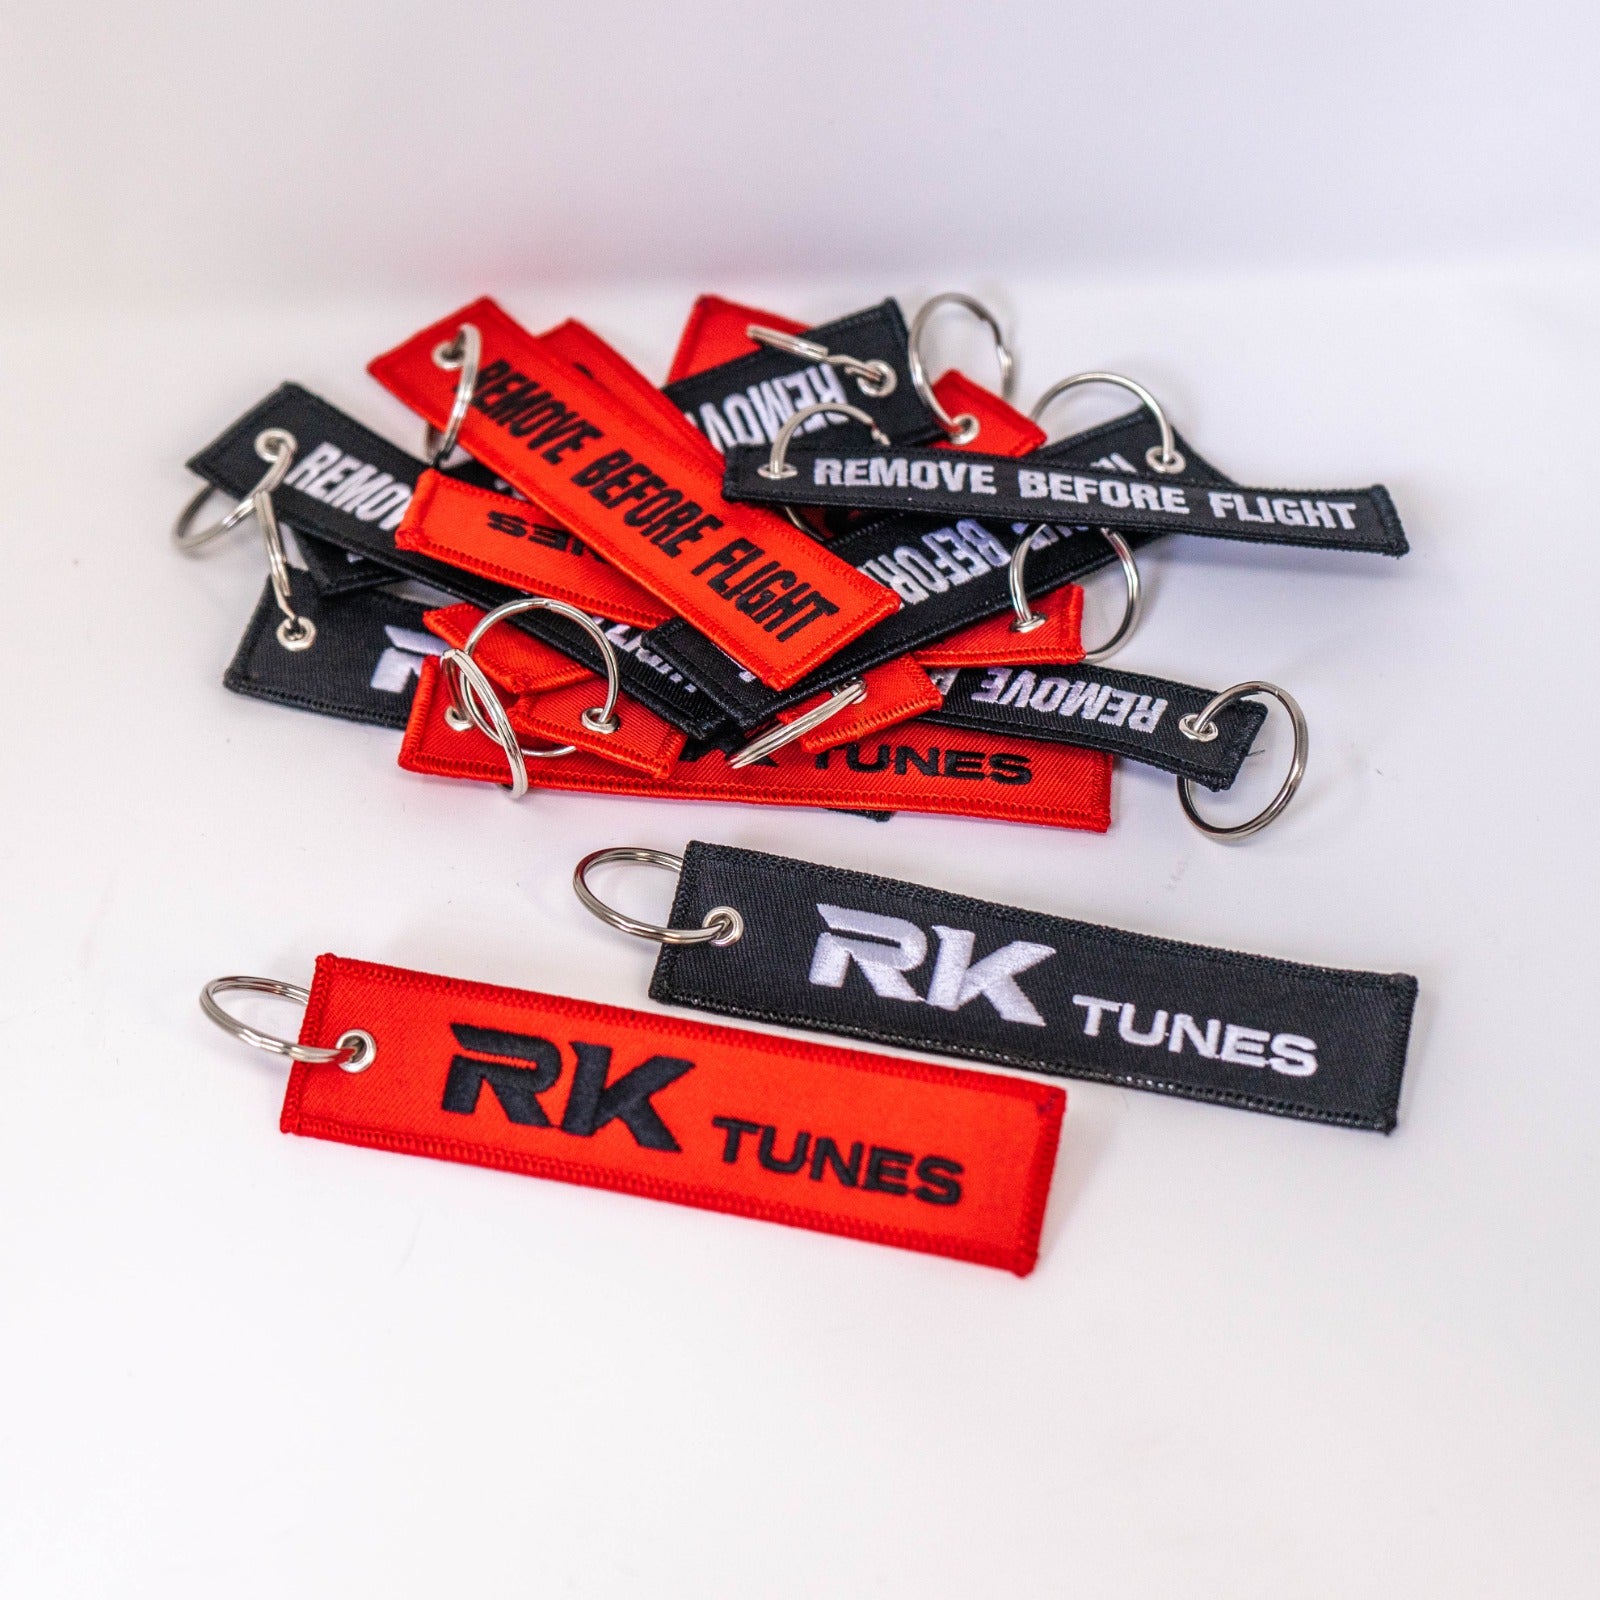 RK-Tunes Remove Before Flight Keychain